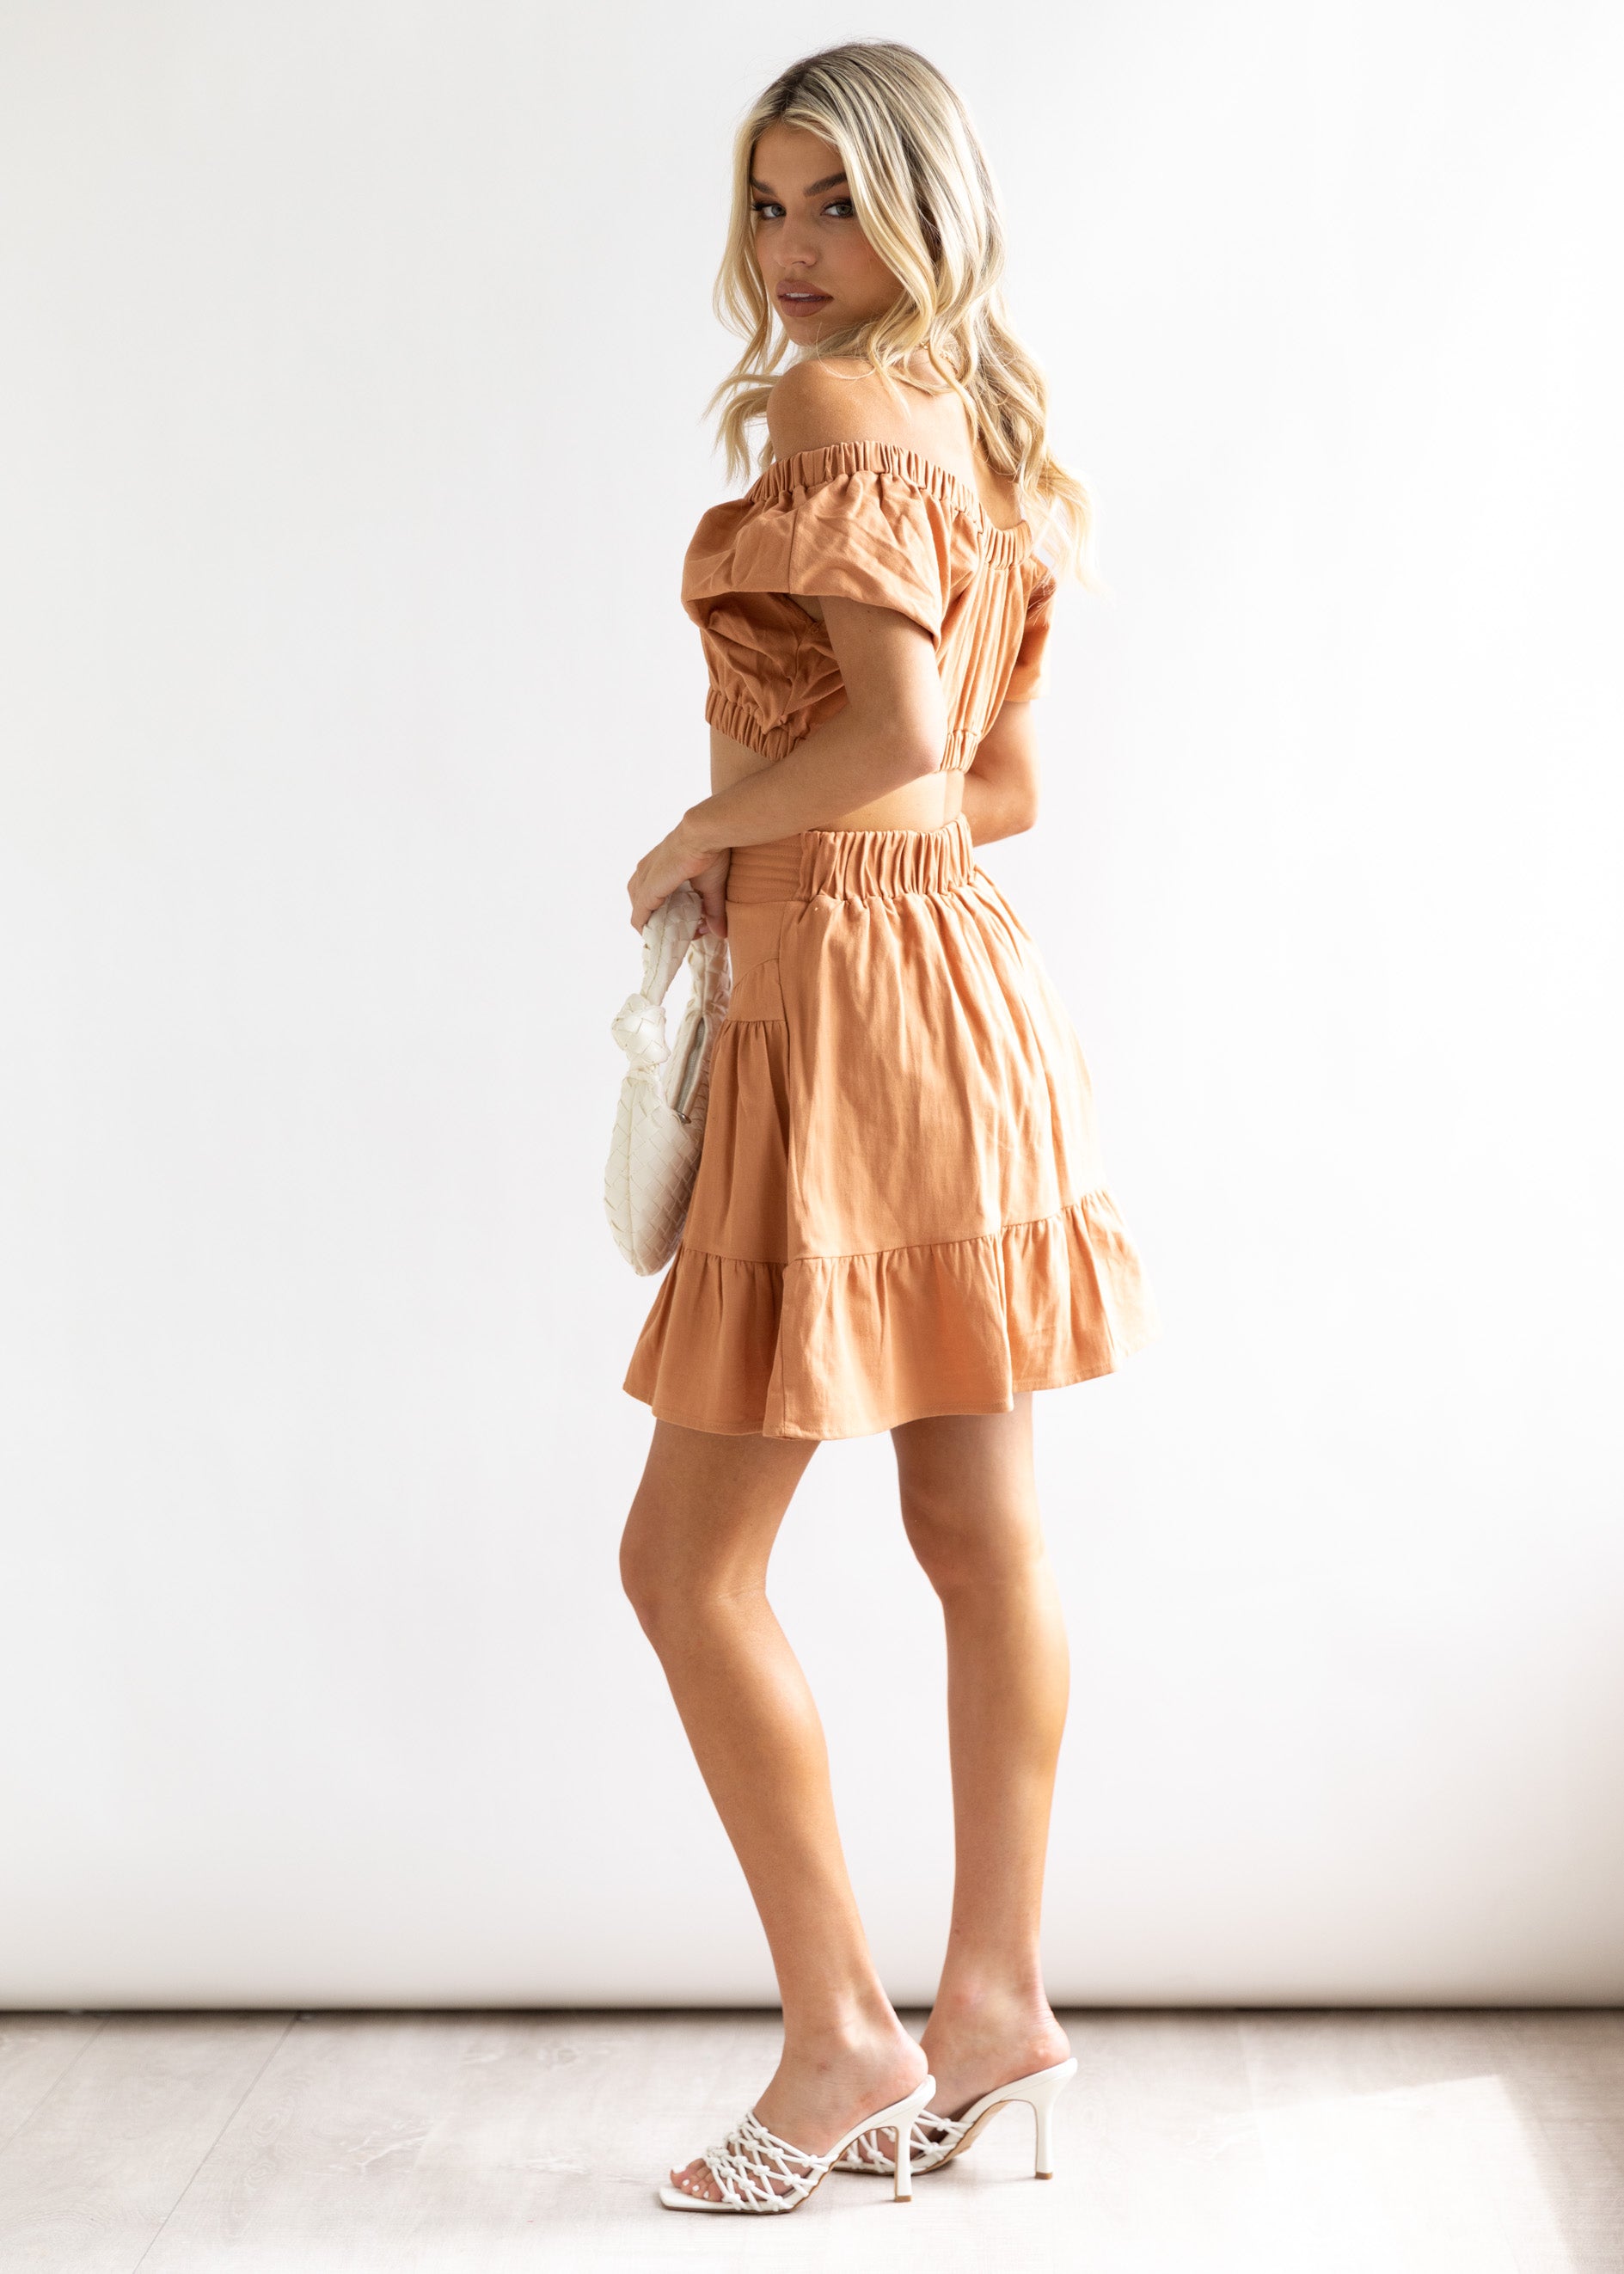 Clarice Skirt - Caramel